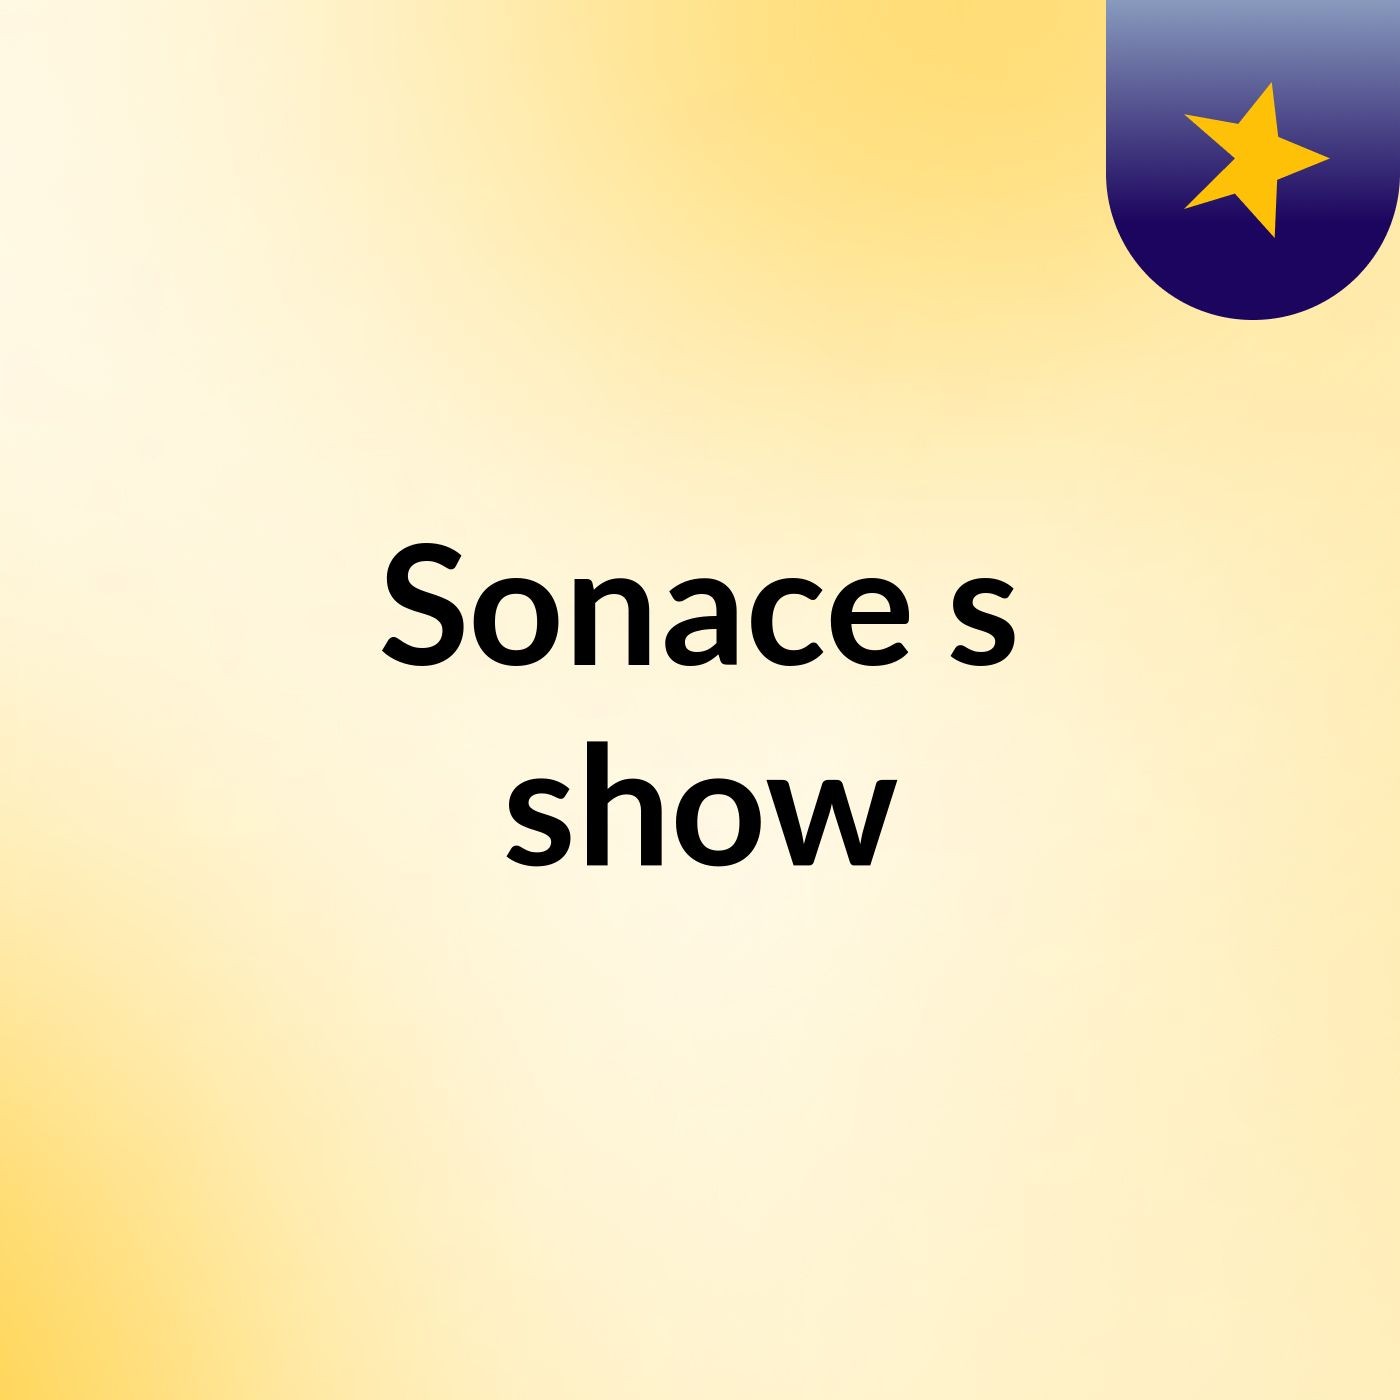 Sonace's show